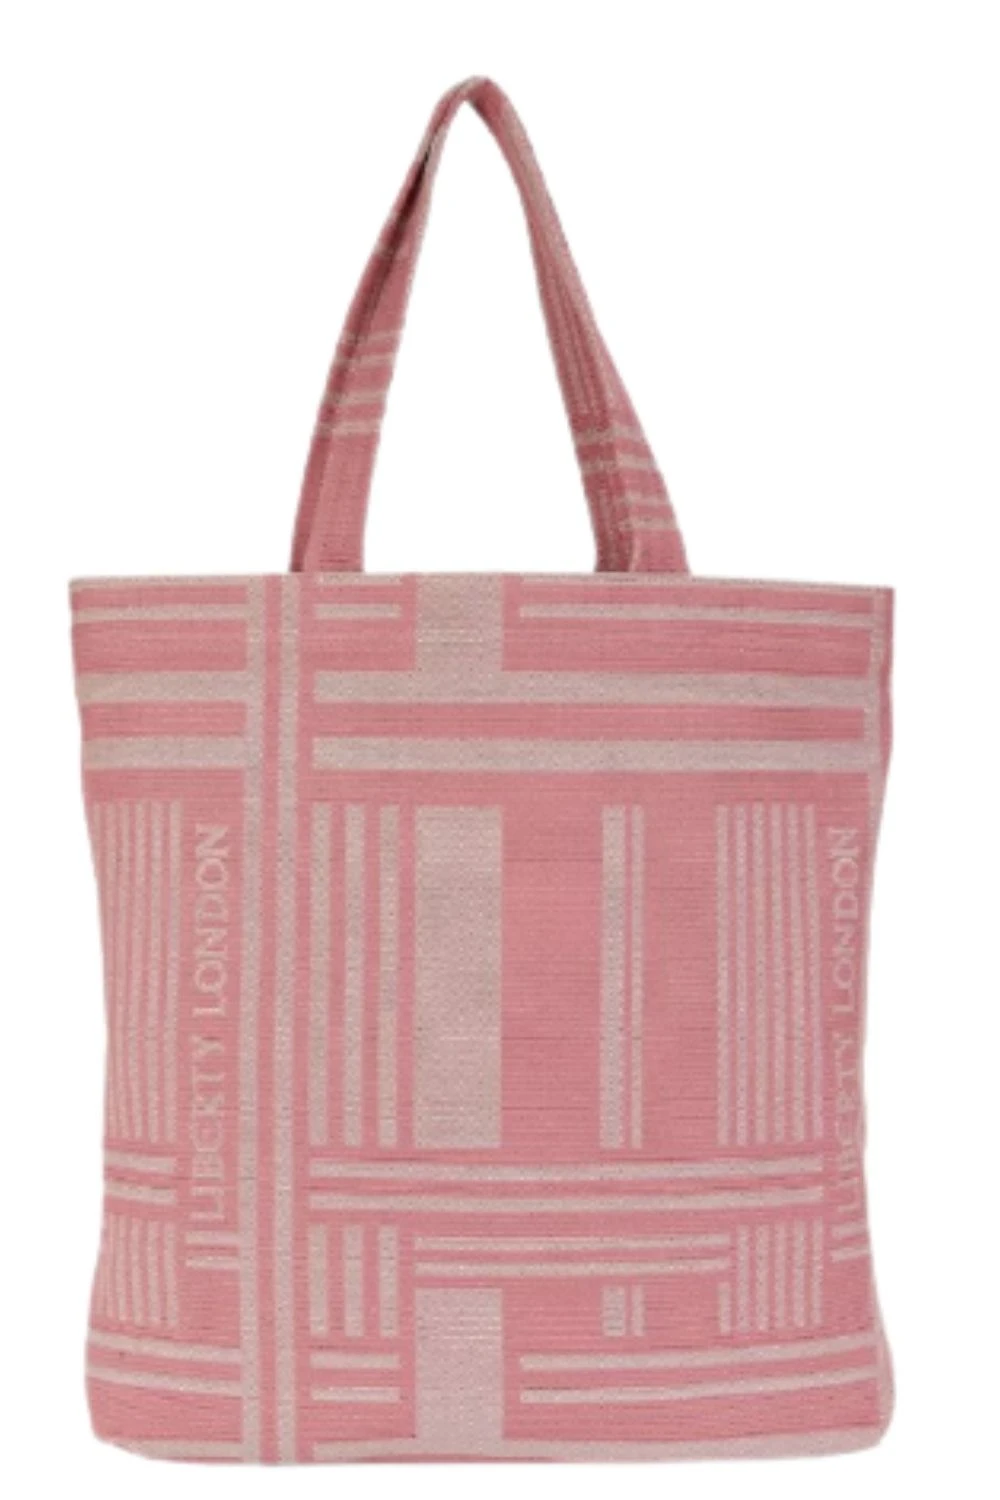 Liberty London Tote Womens Large Pink Shoulder Bag Canvas Jacquard Book Bag